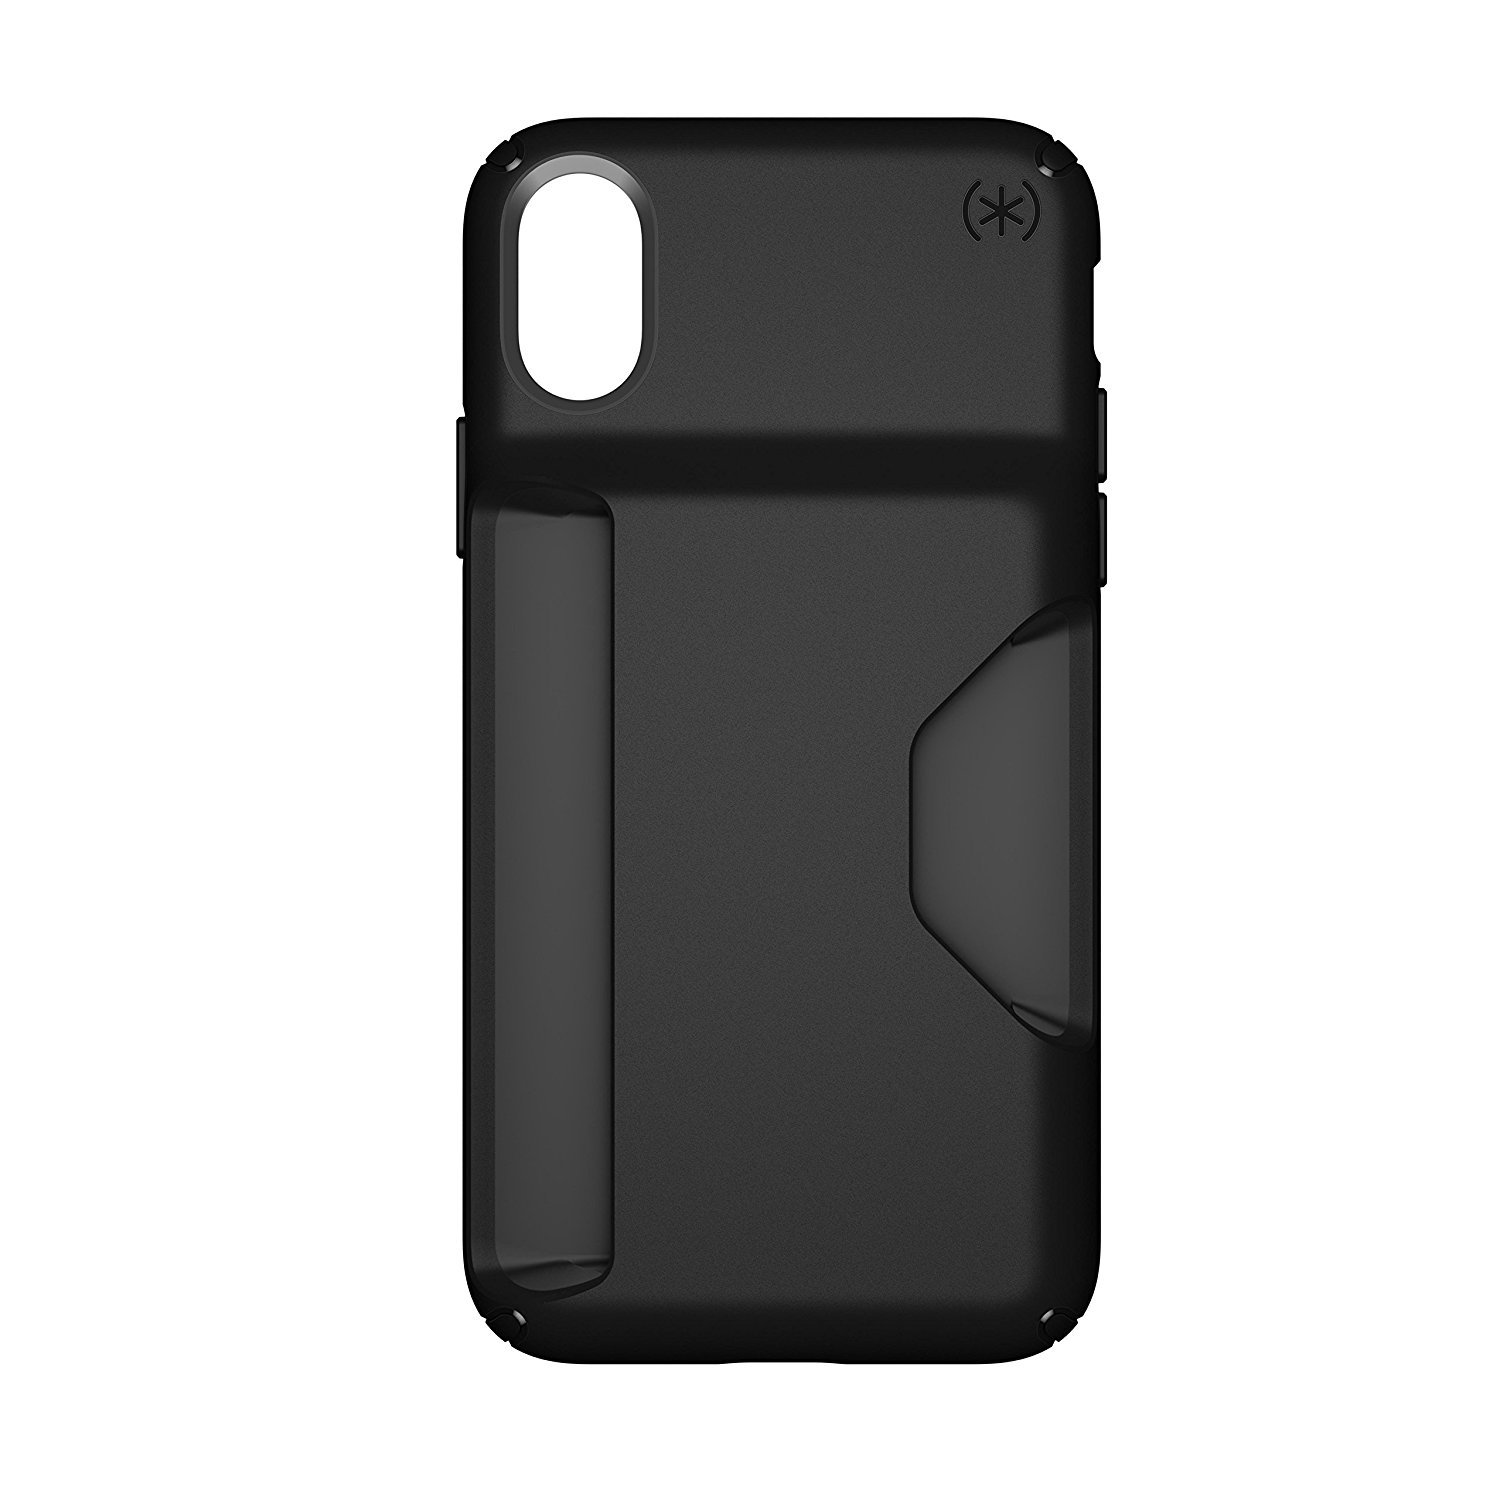 Speck Presidio iPhone X Tough Case - Black